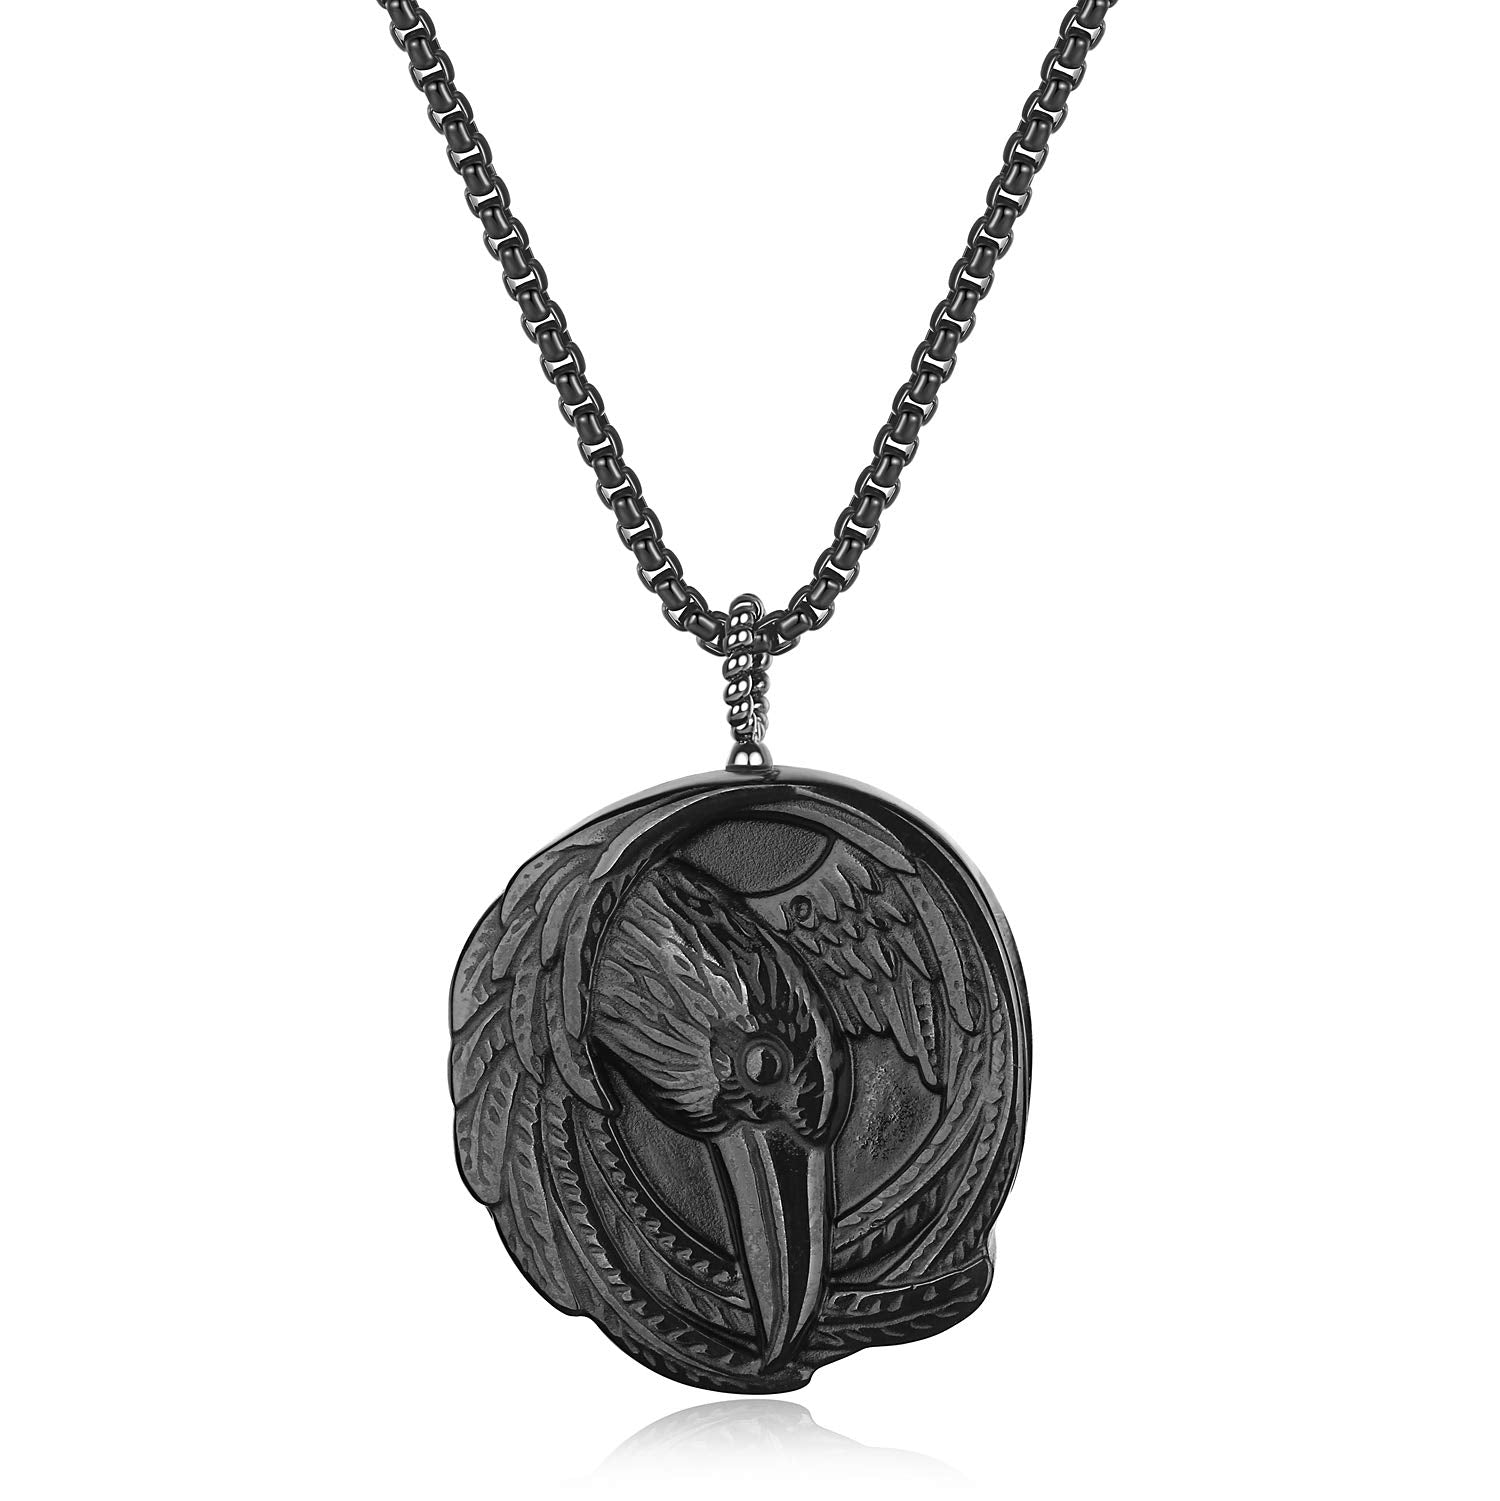 COAI Raven Obsidian Stone Pendant Necklace for Men Women